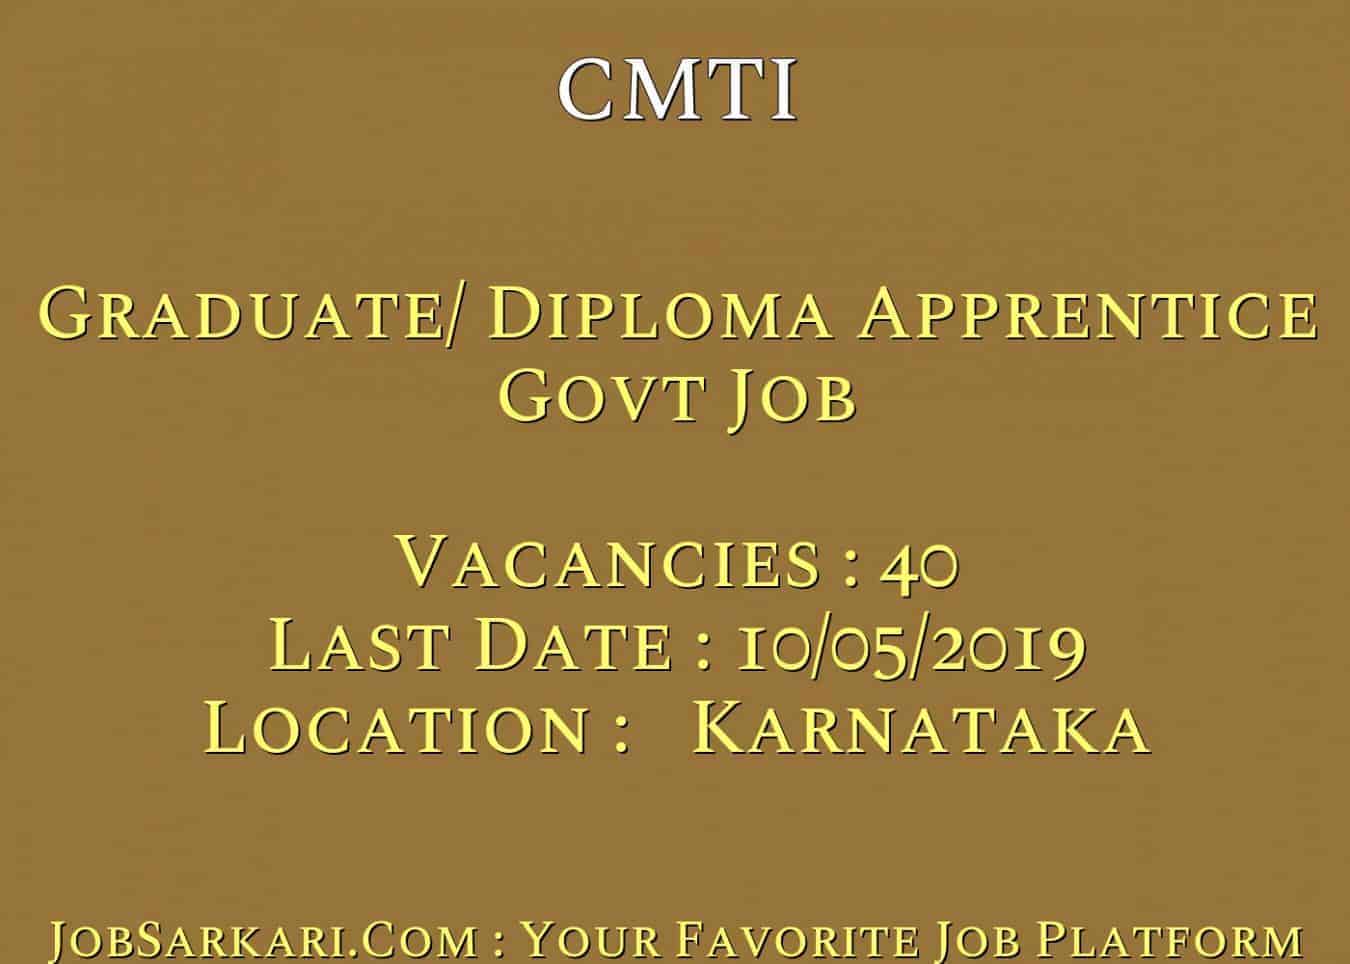 CMTI Recruitment 2019 For Graduate/ Diploma Apprentice Govt Job